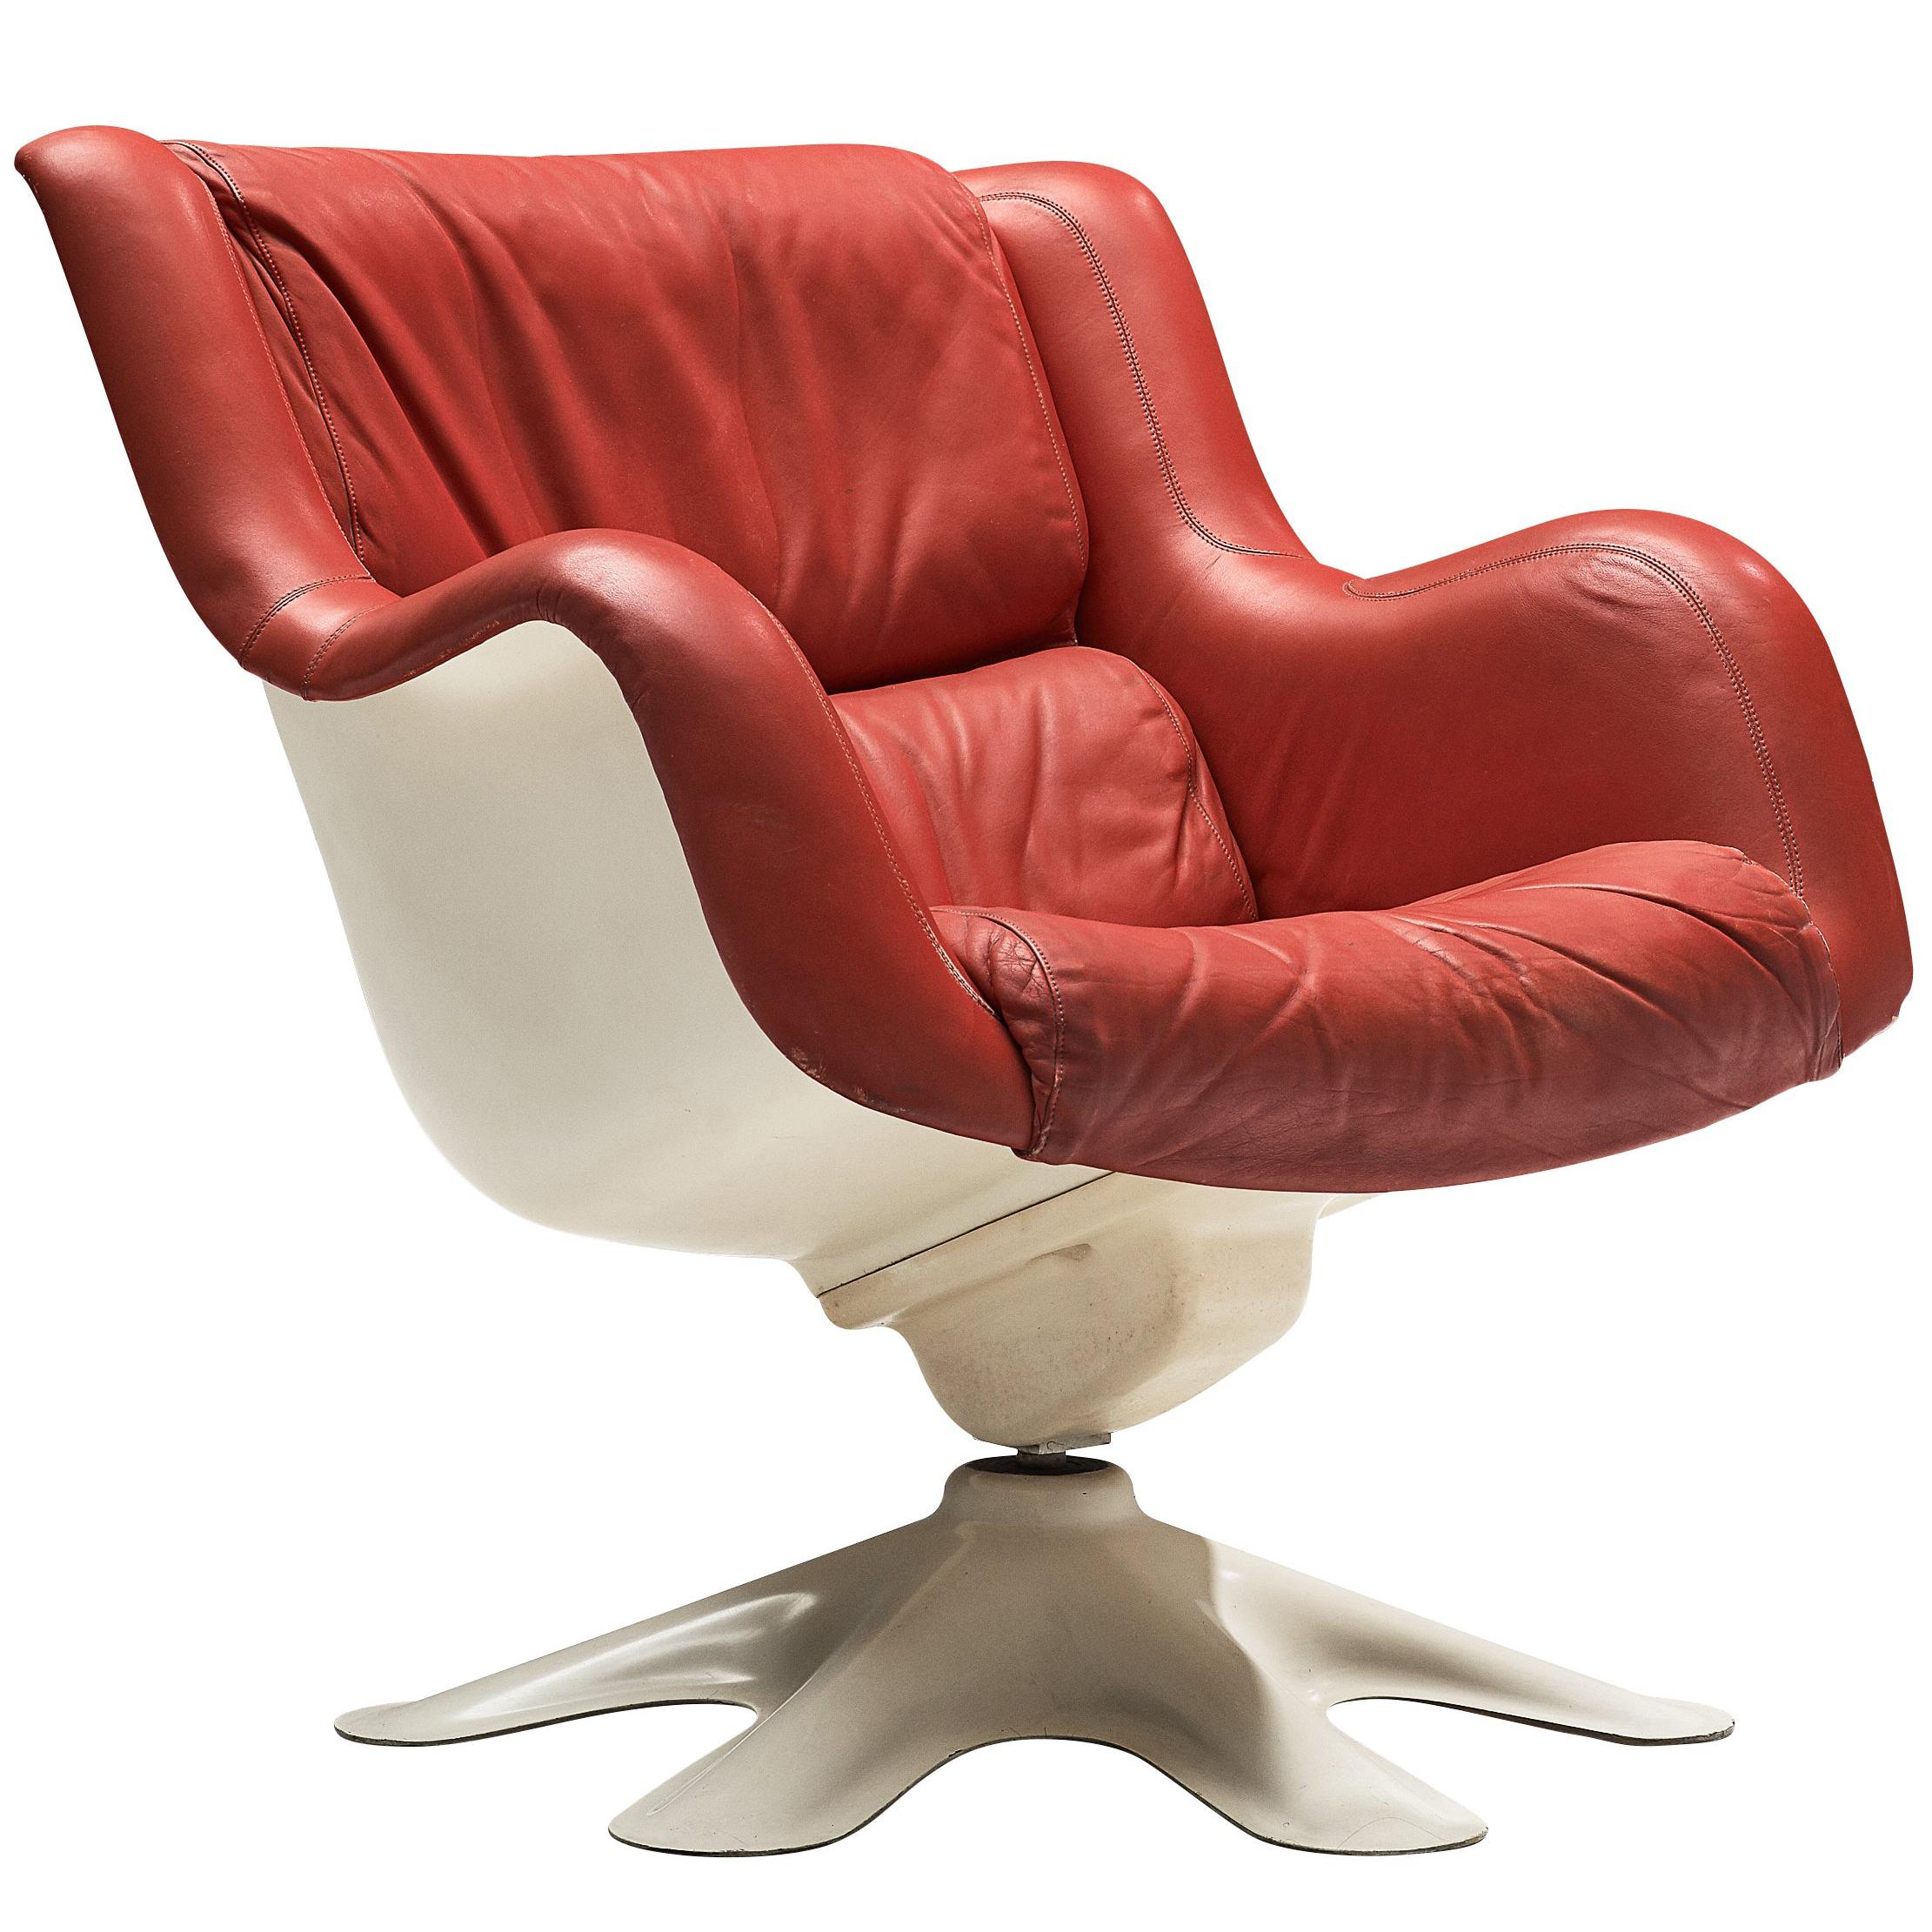 Yrjö Kukkapuro 'Karuselli' Swivel Lounge Chair in Leather and Fibreglass